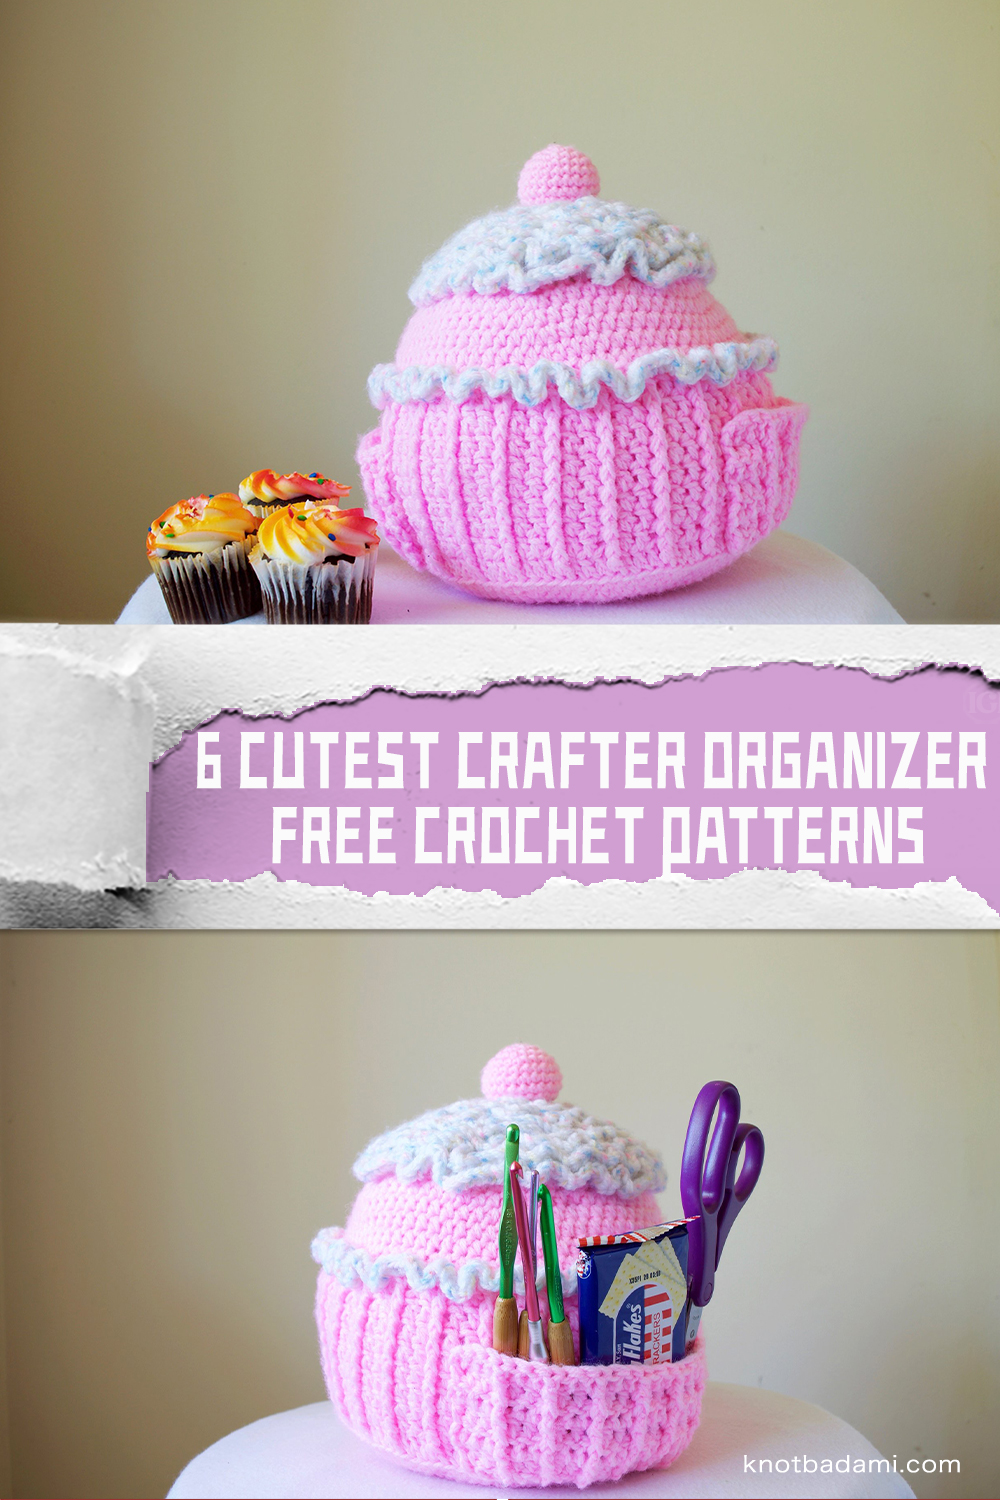 6 Cutest Crafter Organizer FREE Crochet Patterns